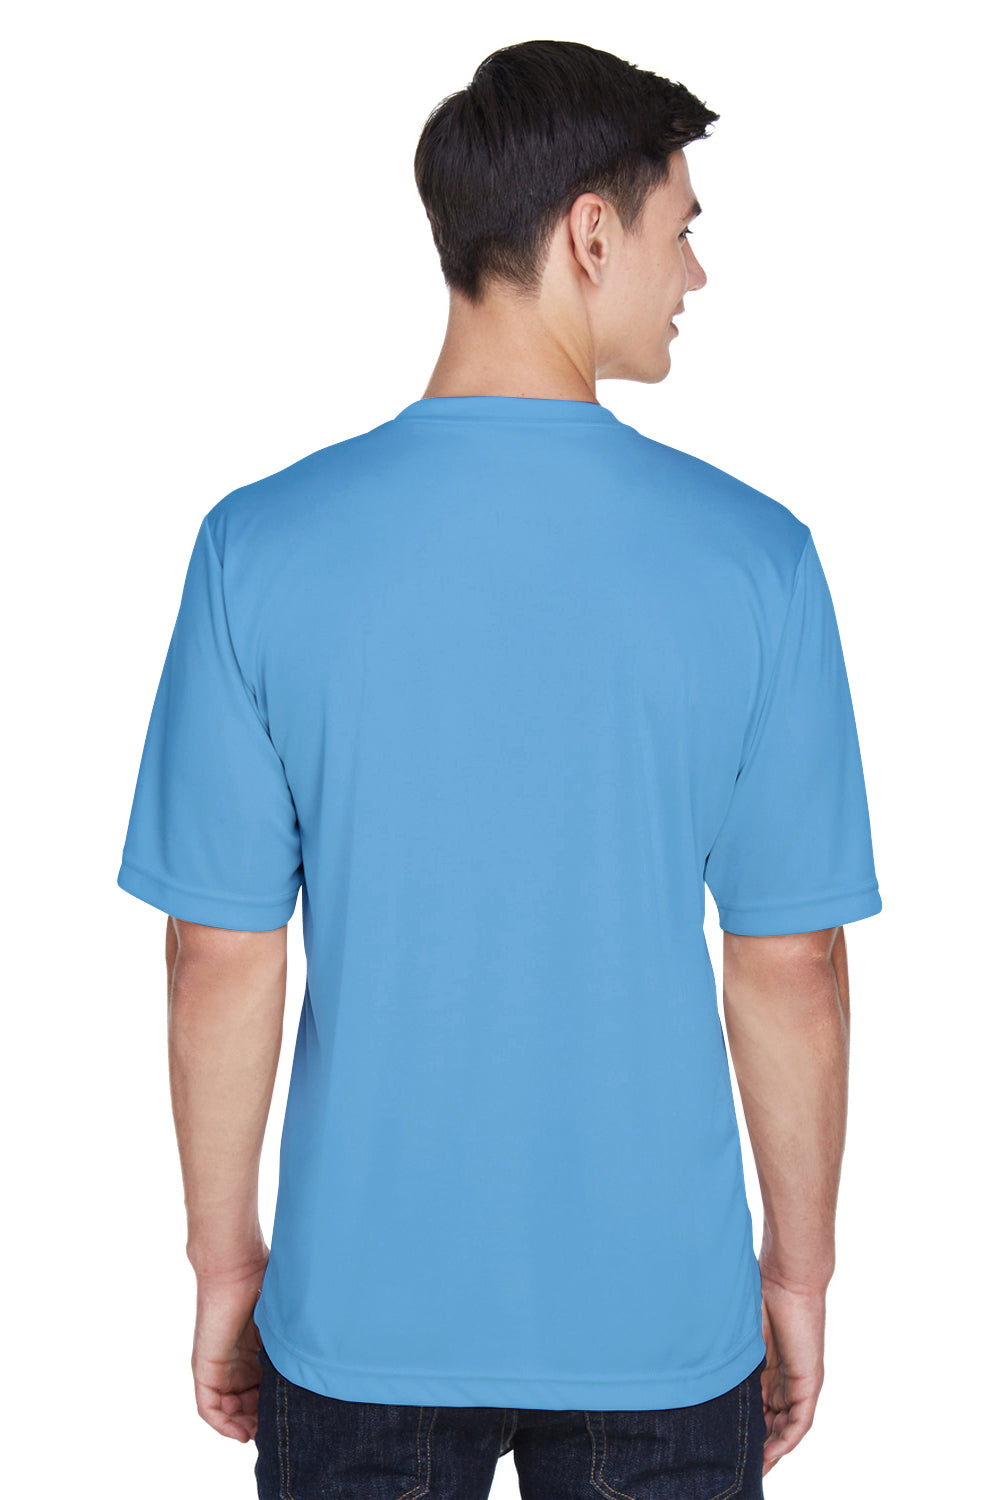 Team 365 TT11 Mens Zone Performance Moisture Wicking Short Sleeve Crewneck T-Shirt Light Blue Back